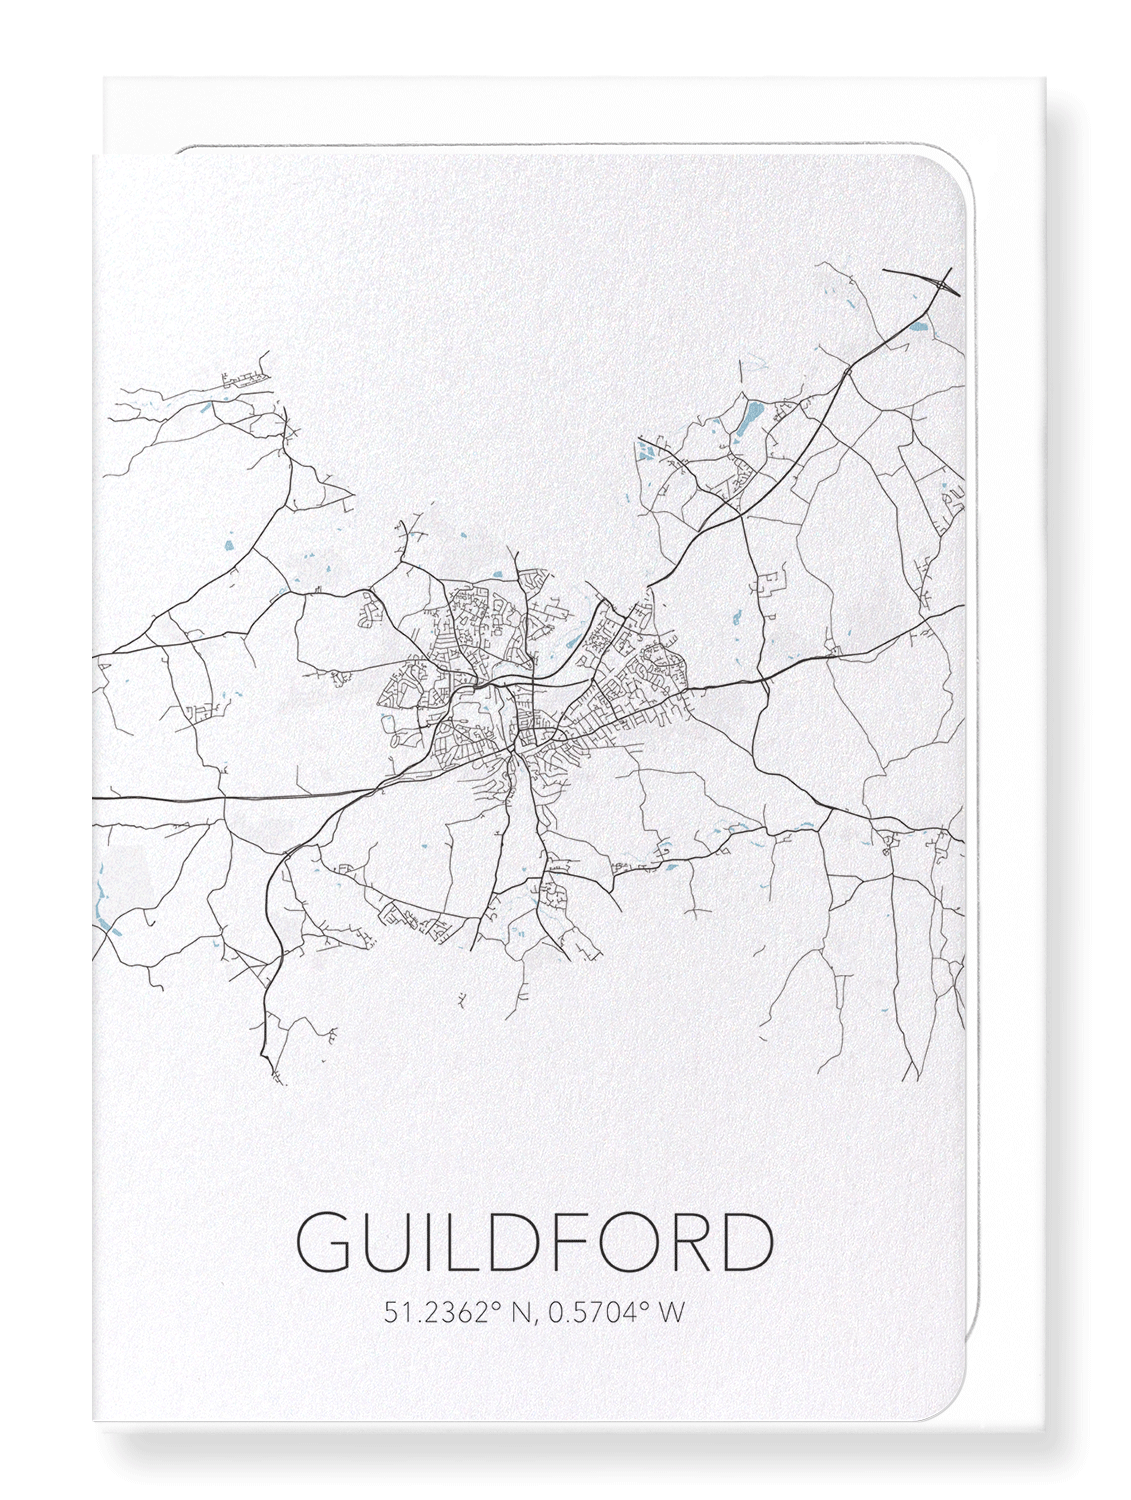 GUILDFORD CUTOUT: Map Cutout Greeting Card